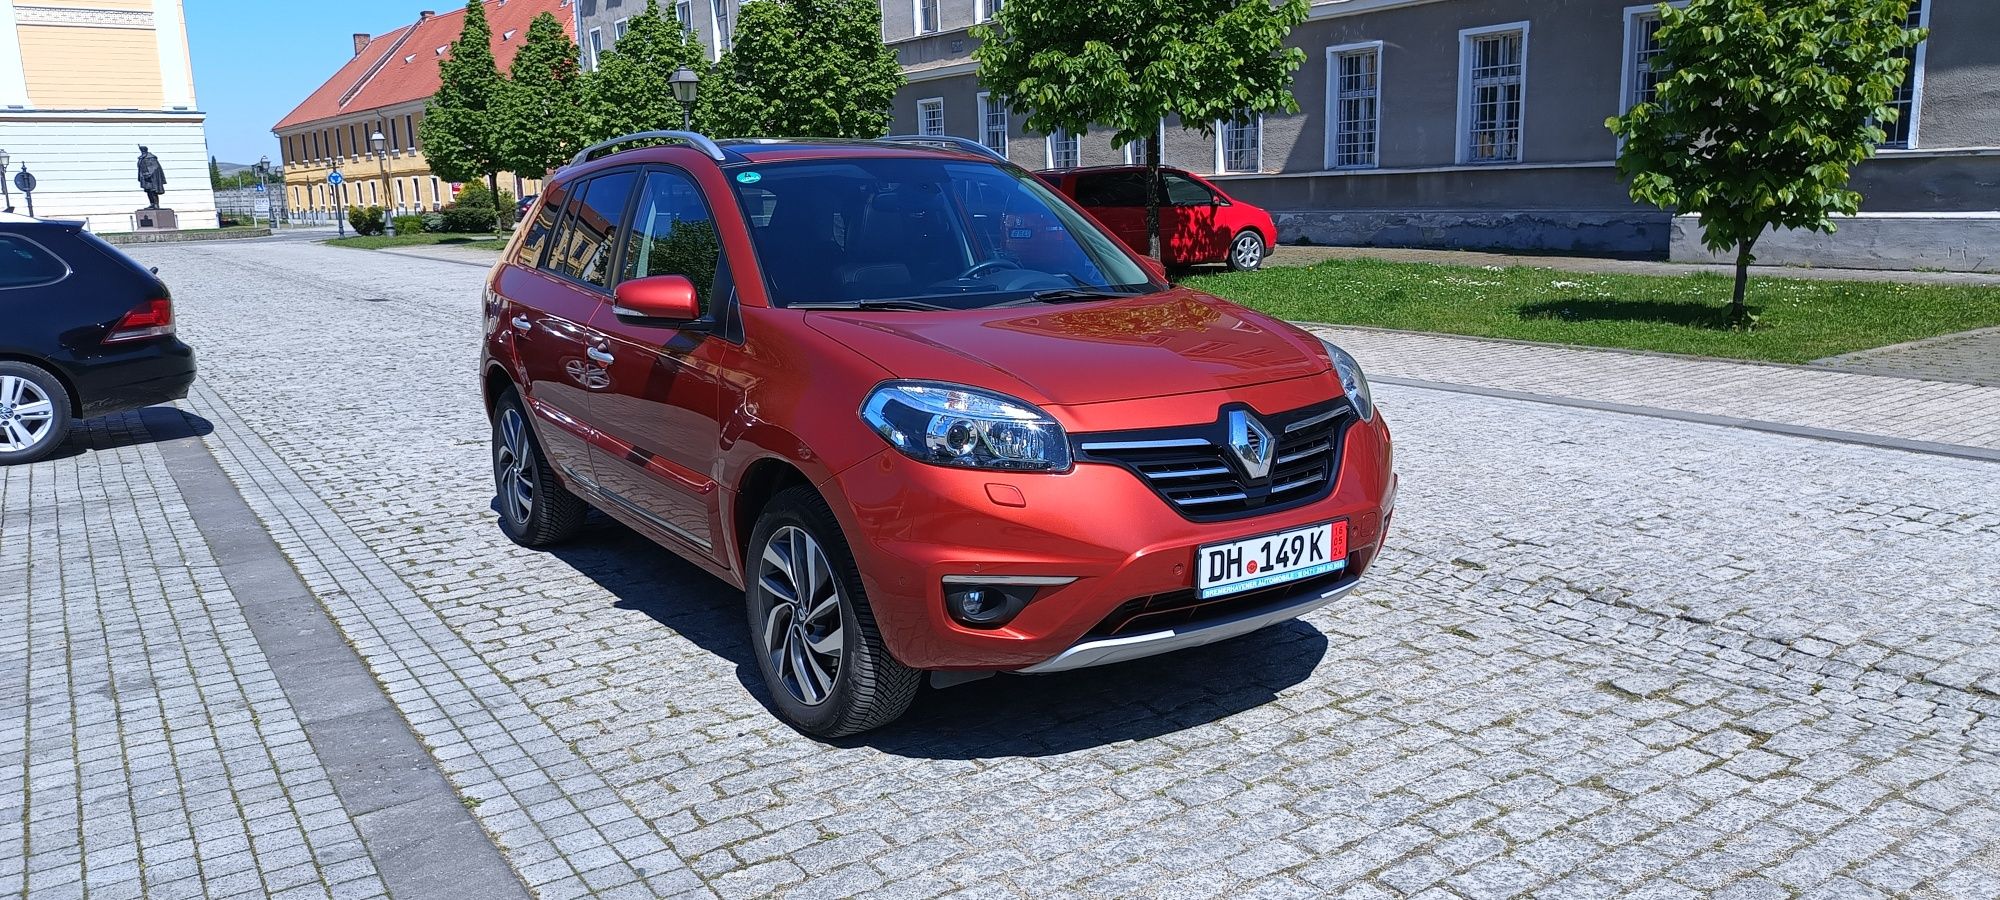 Renault koleos "Night &Day" 2.0 ,173 Cp